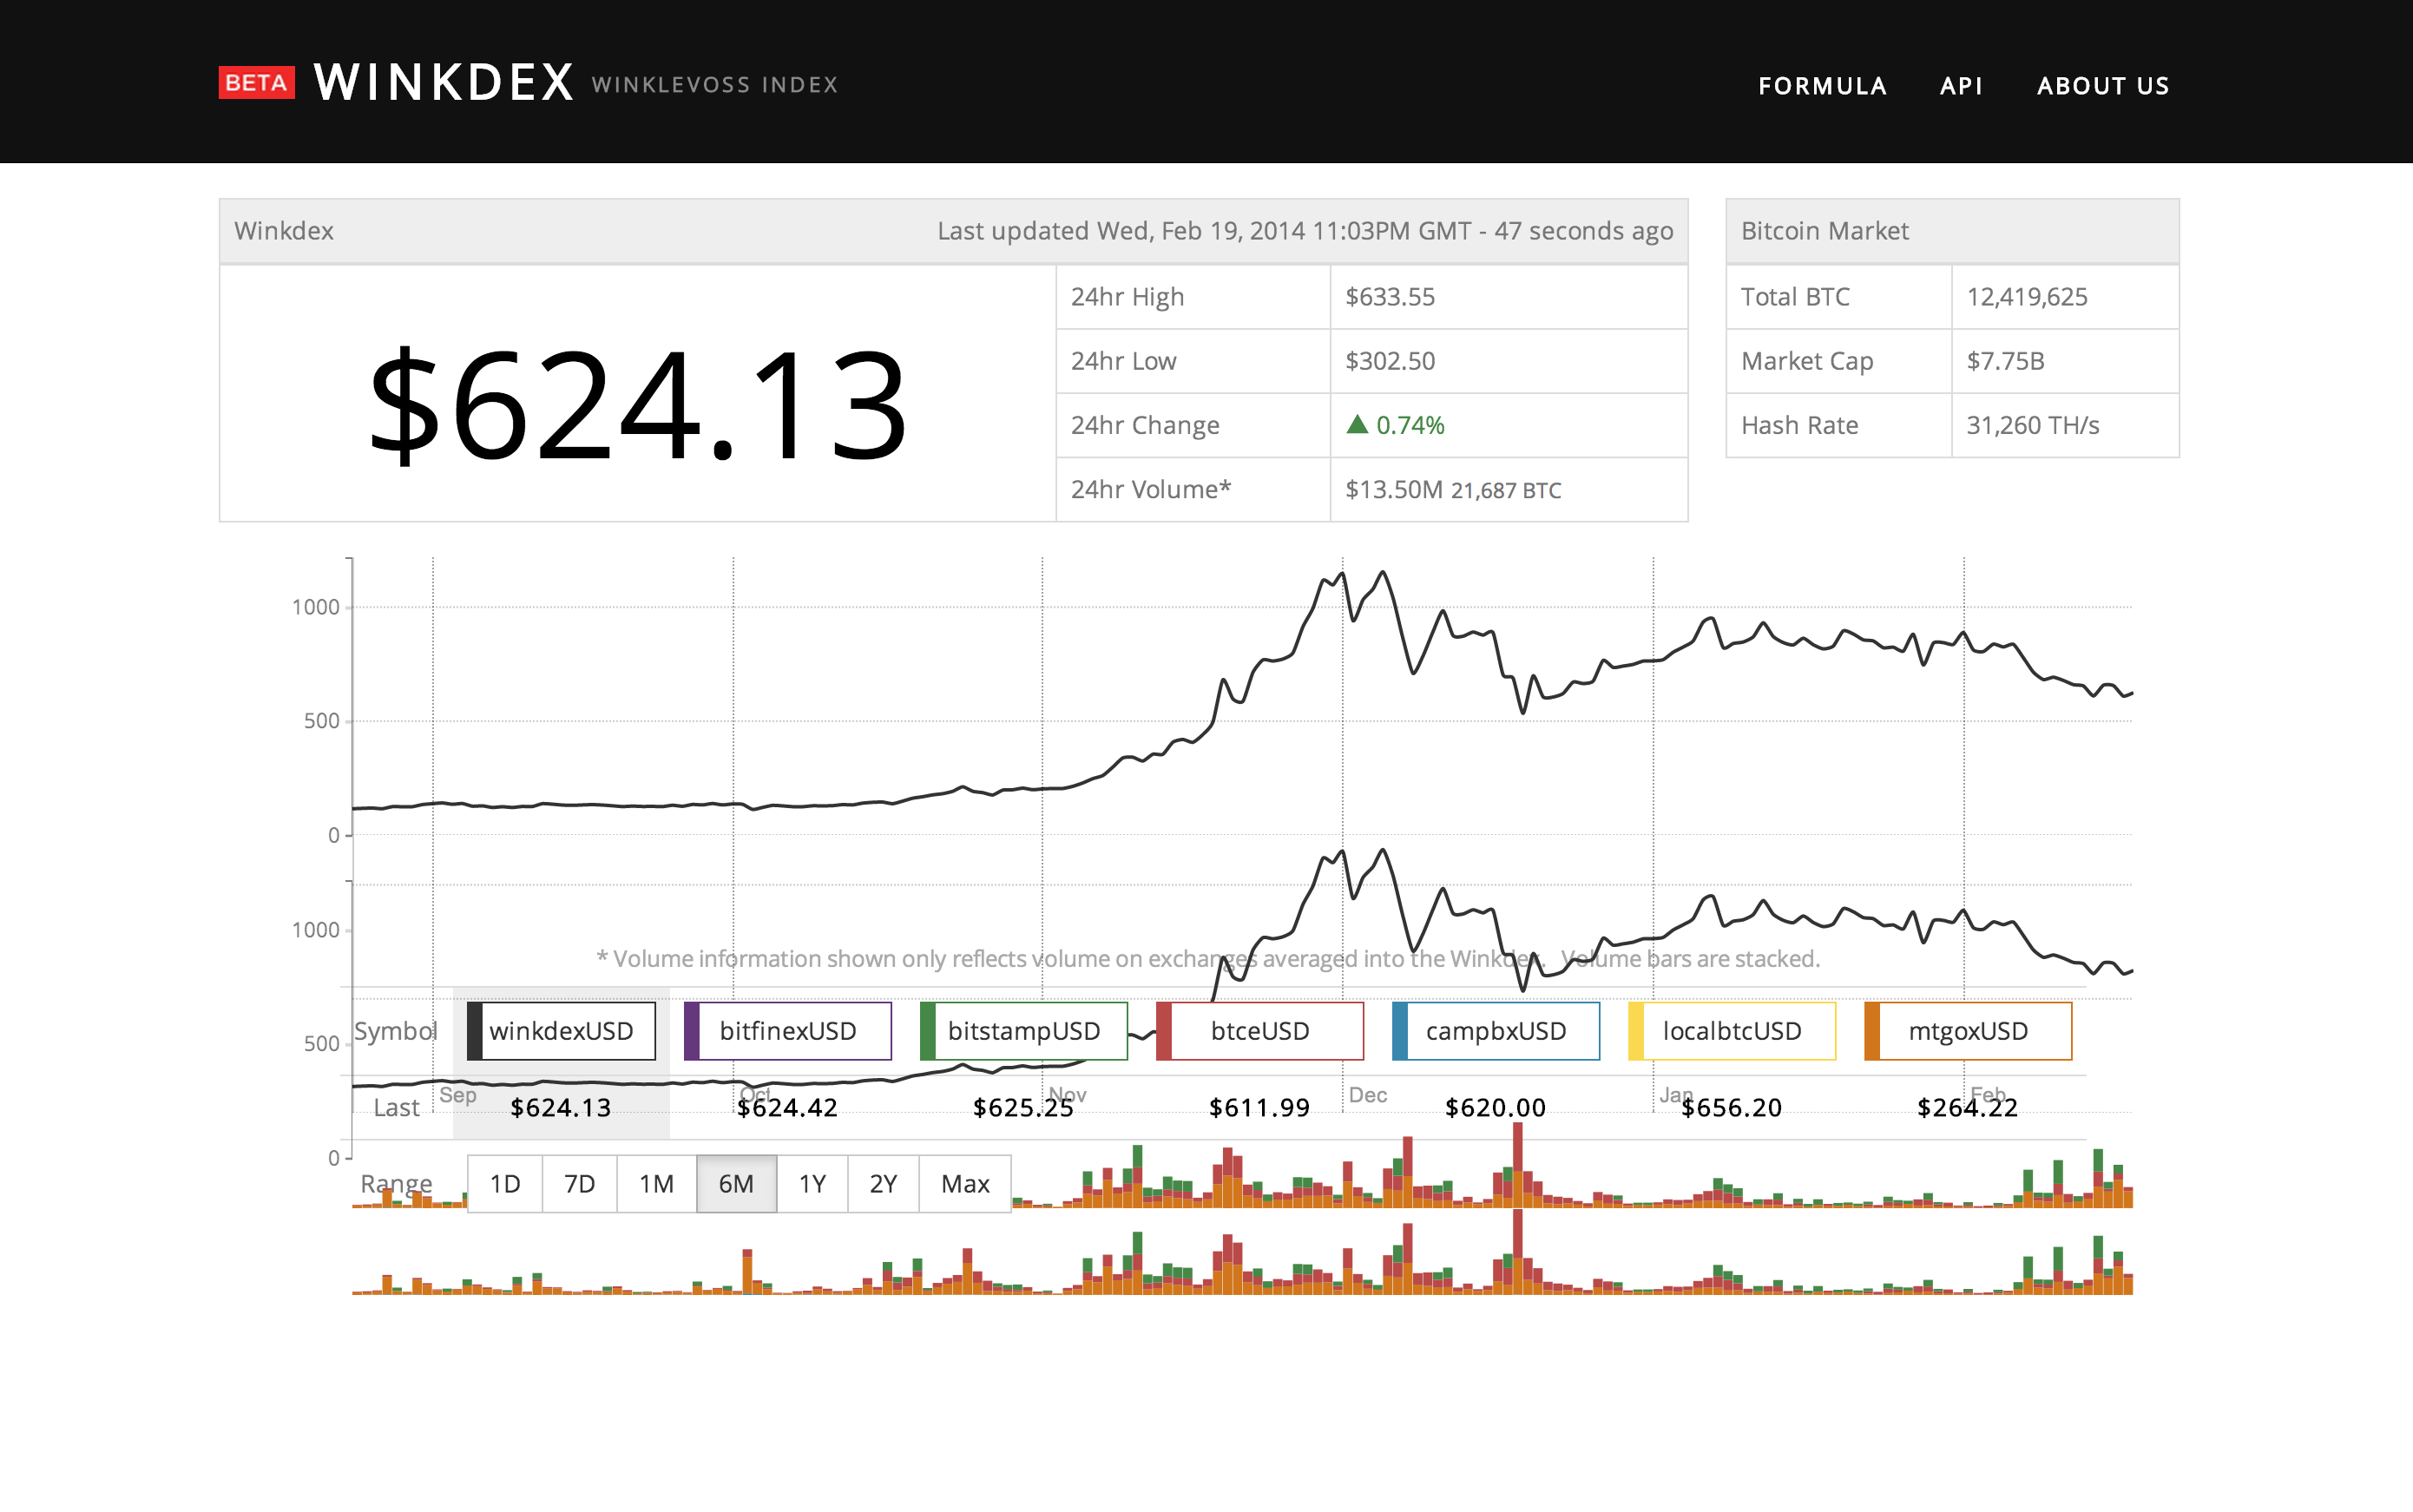 Winklevoss Winkdex bitcoin price index